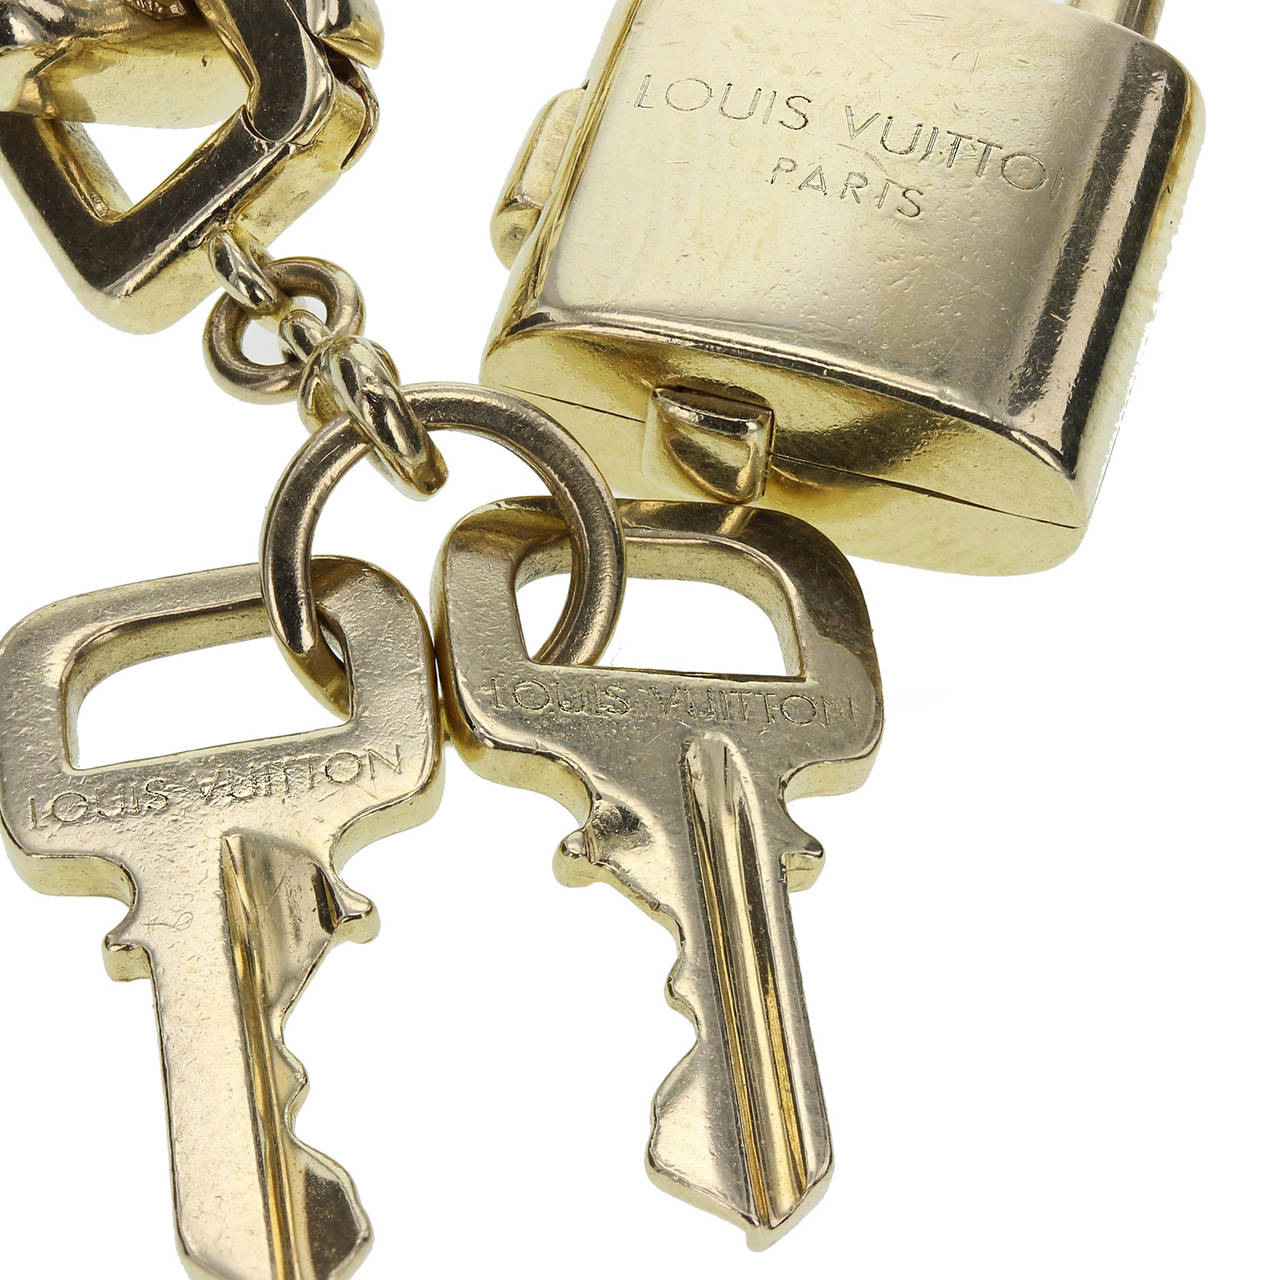 Louis Vuitton Paris Heavy Gold Padlock and Key Bracelet at 1stdibs